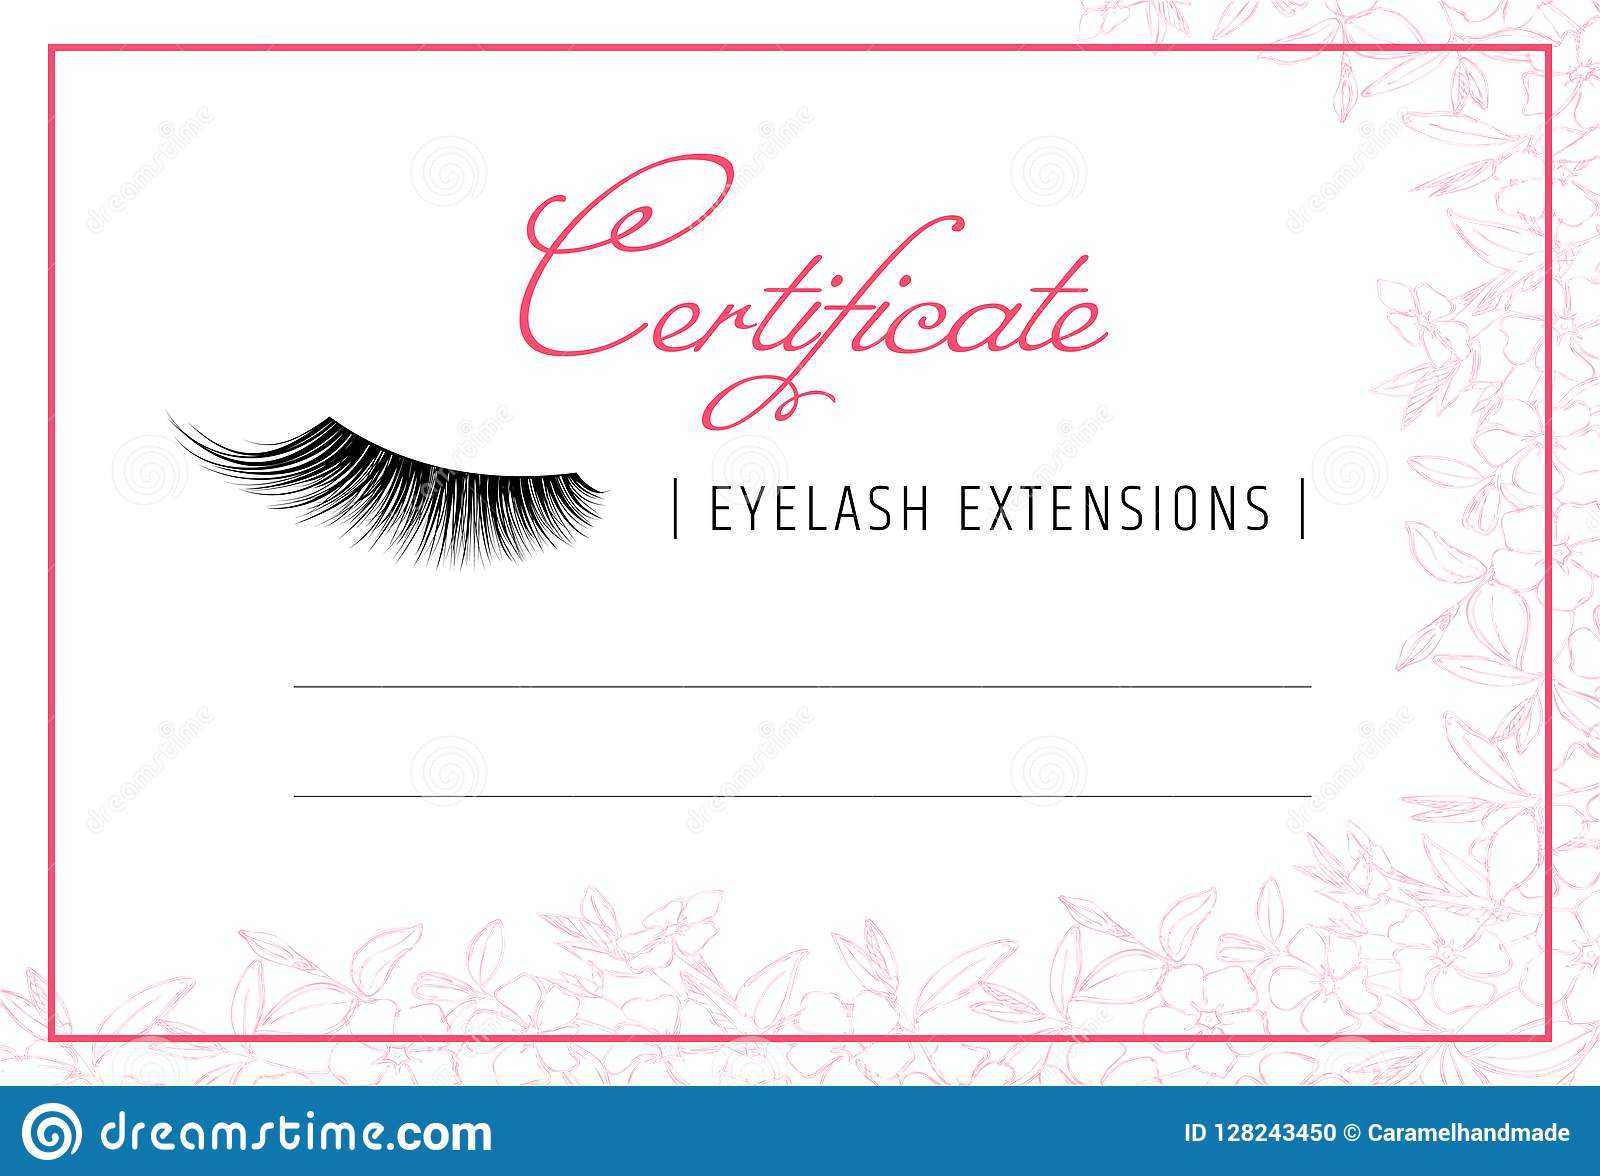 Diploma Eyelash Extensions. Makeup Certificate Template Inside School Certificate Templates Free